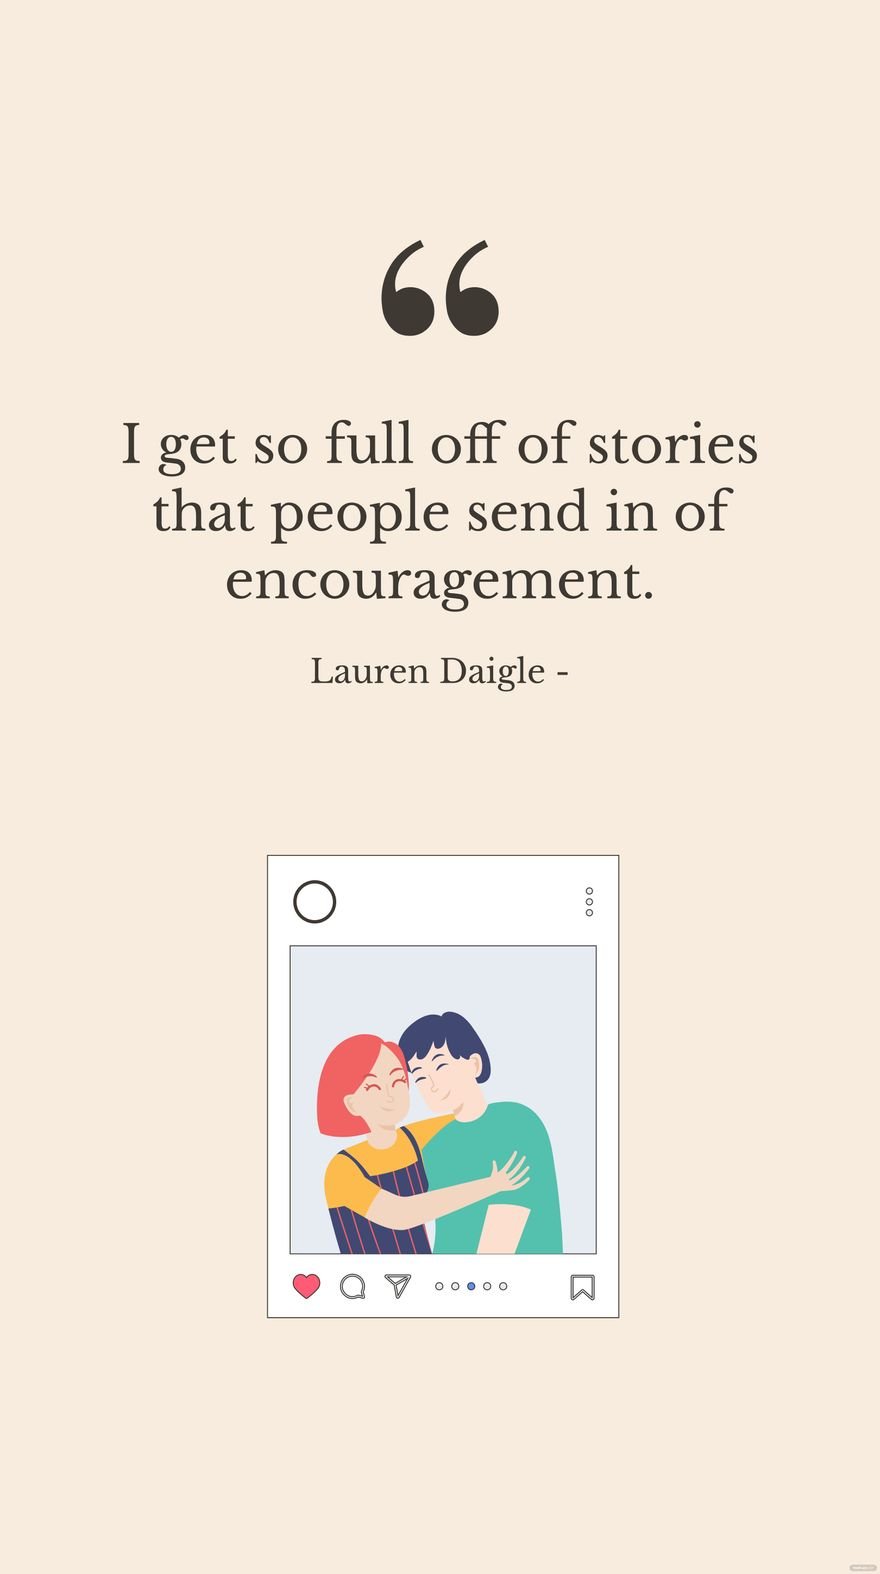 Lauren Daigle - I get so full off of stories that people send in of encouragement. in JPG